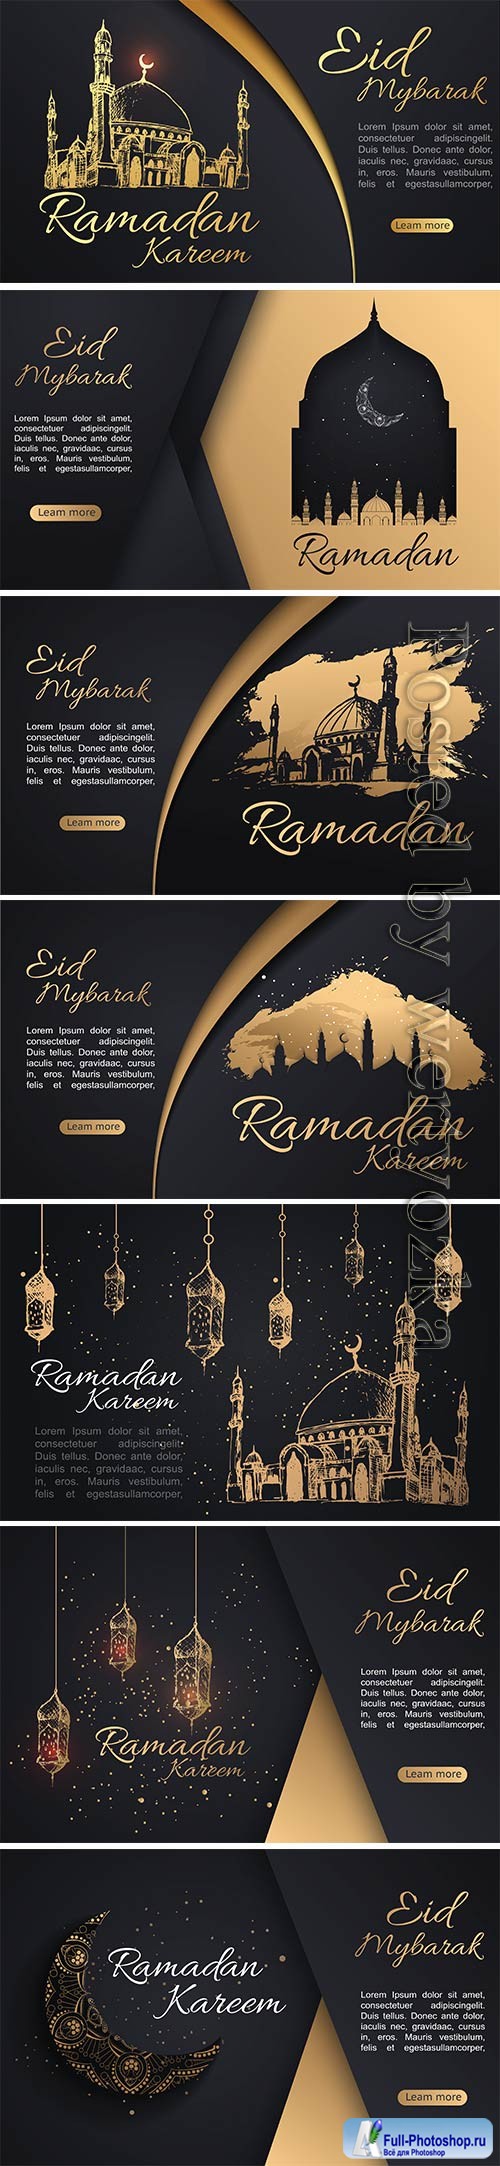 Ramadan Kareem islamic greeting watercolor sketch background